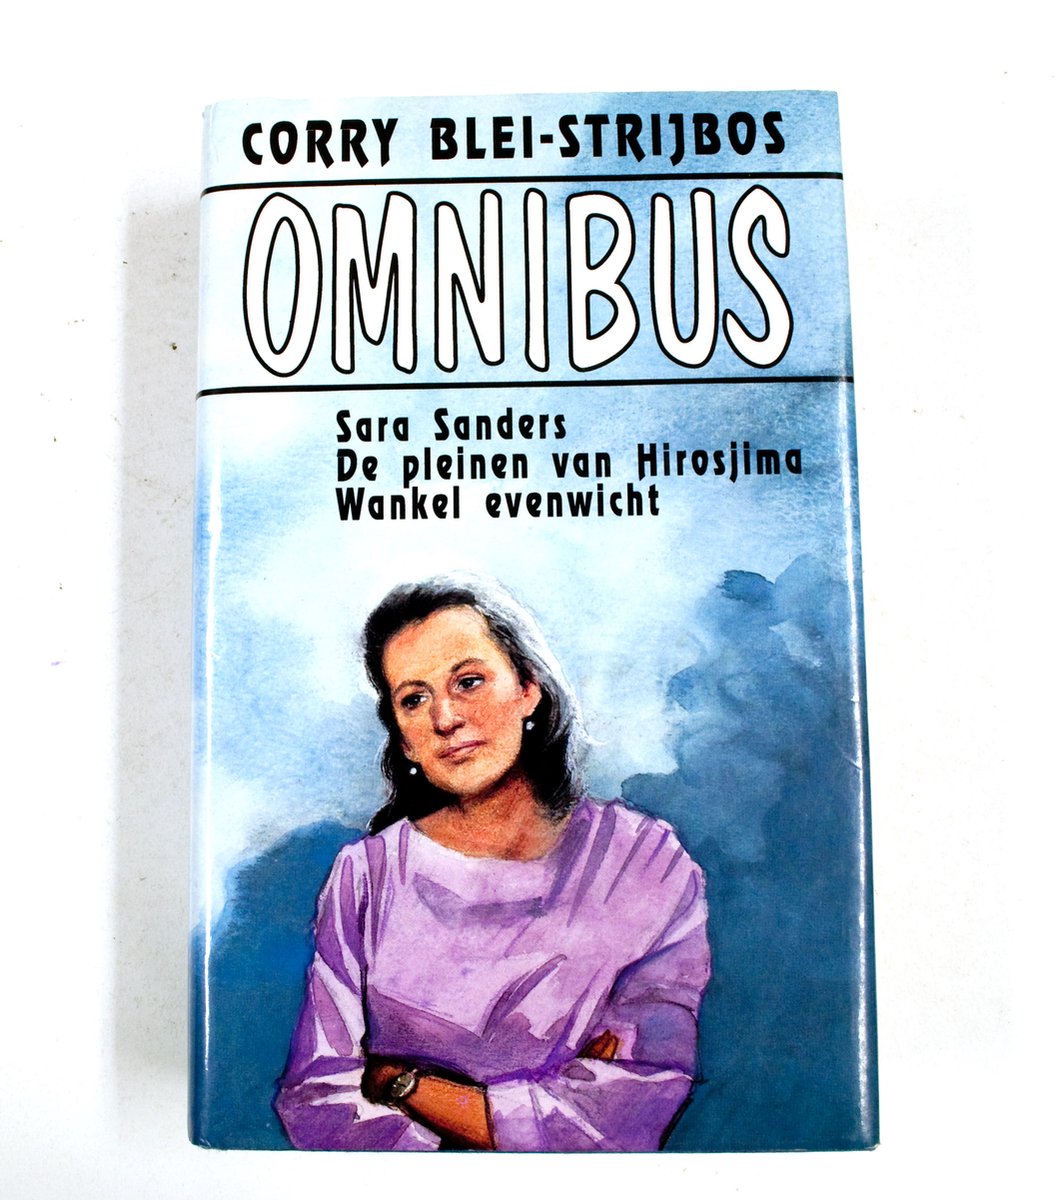 Blei-strijbos (omnibus)